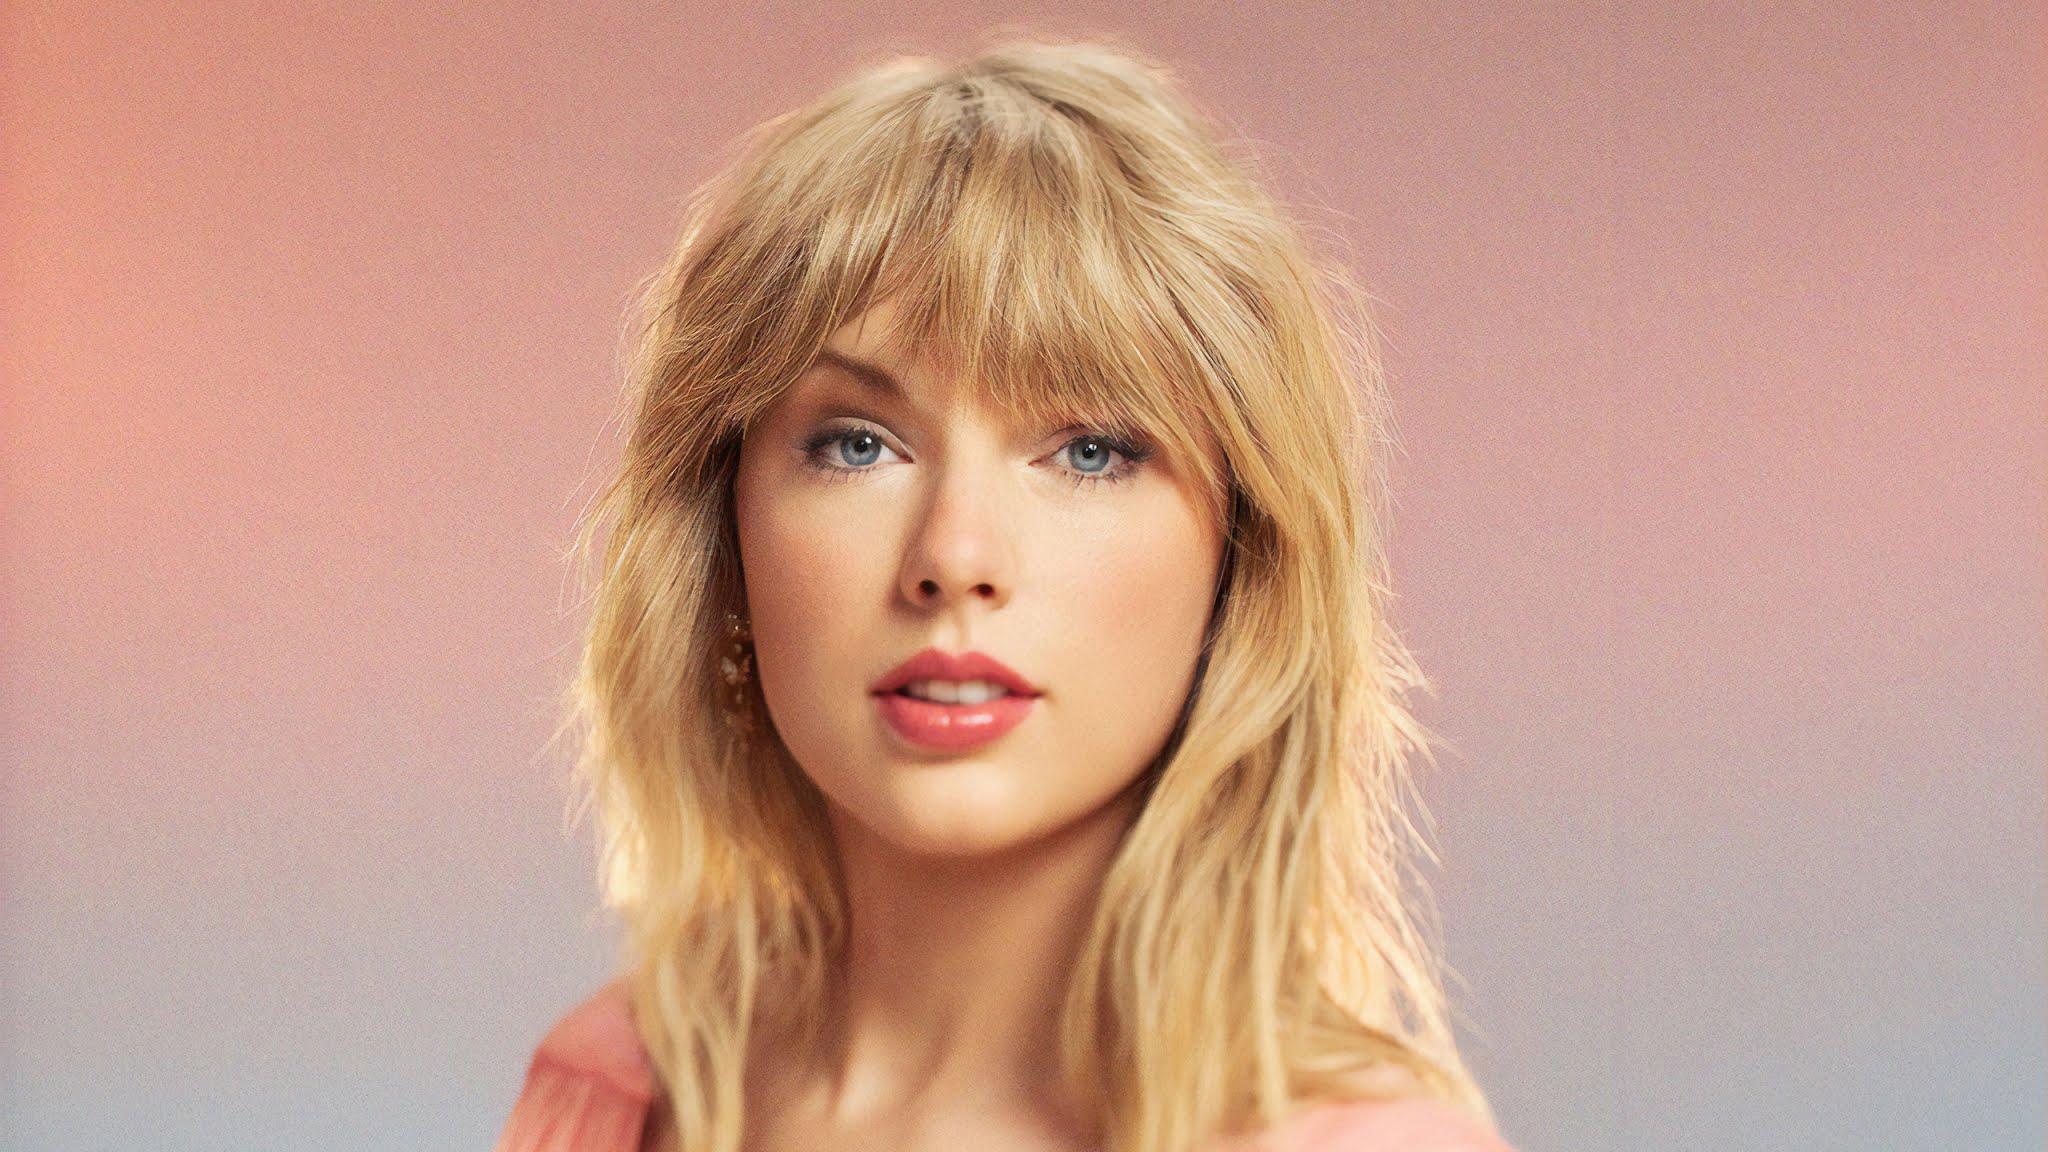 Taylor Swift Wallpaper Lover